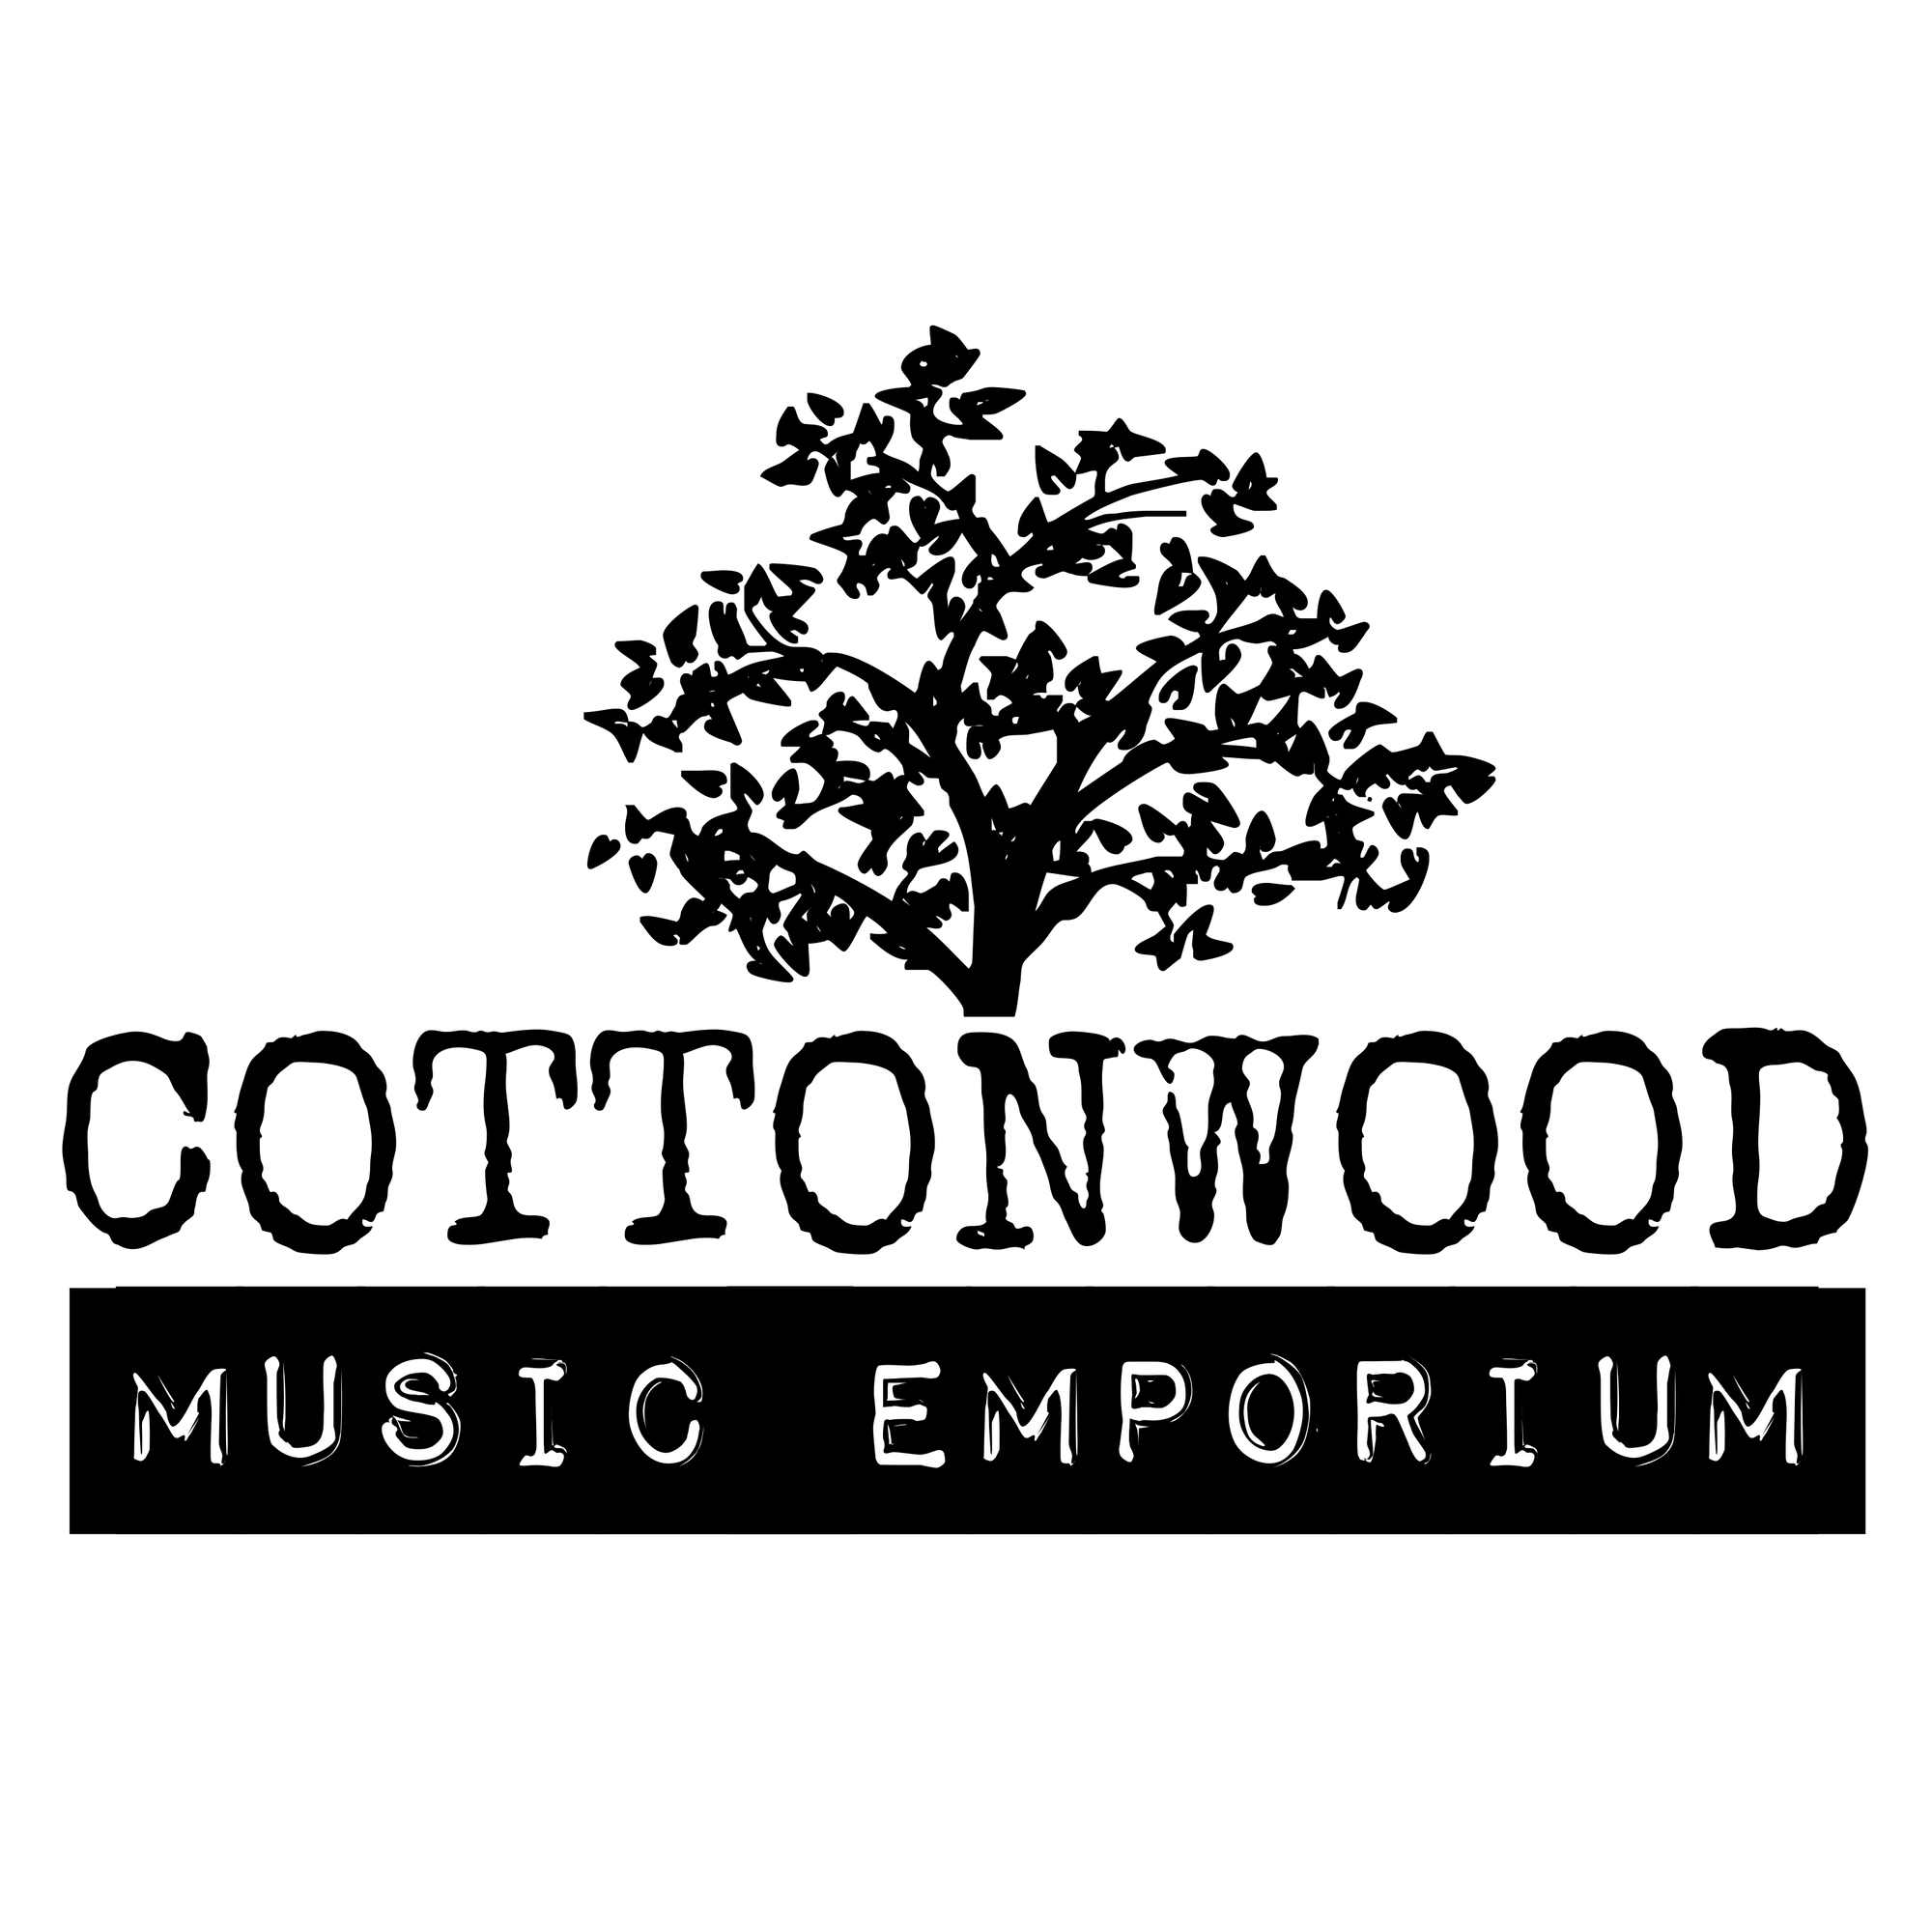 Cottonwood Music Emporium | Merchandise, T-Shirts, Etc.